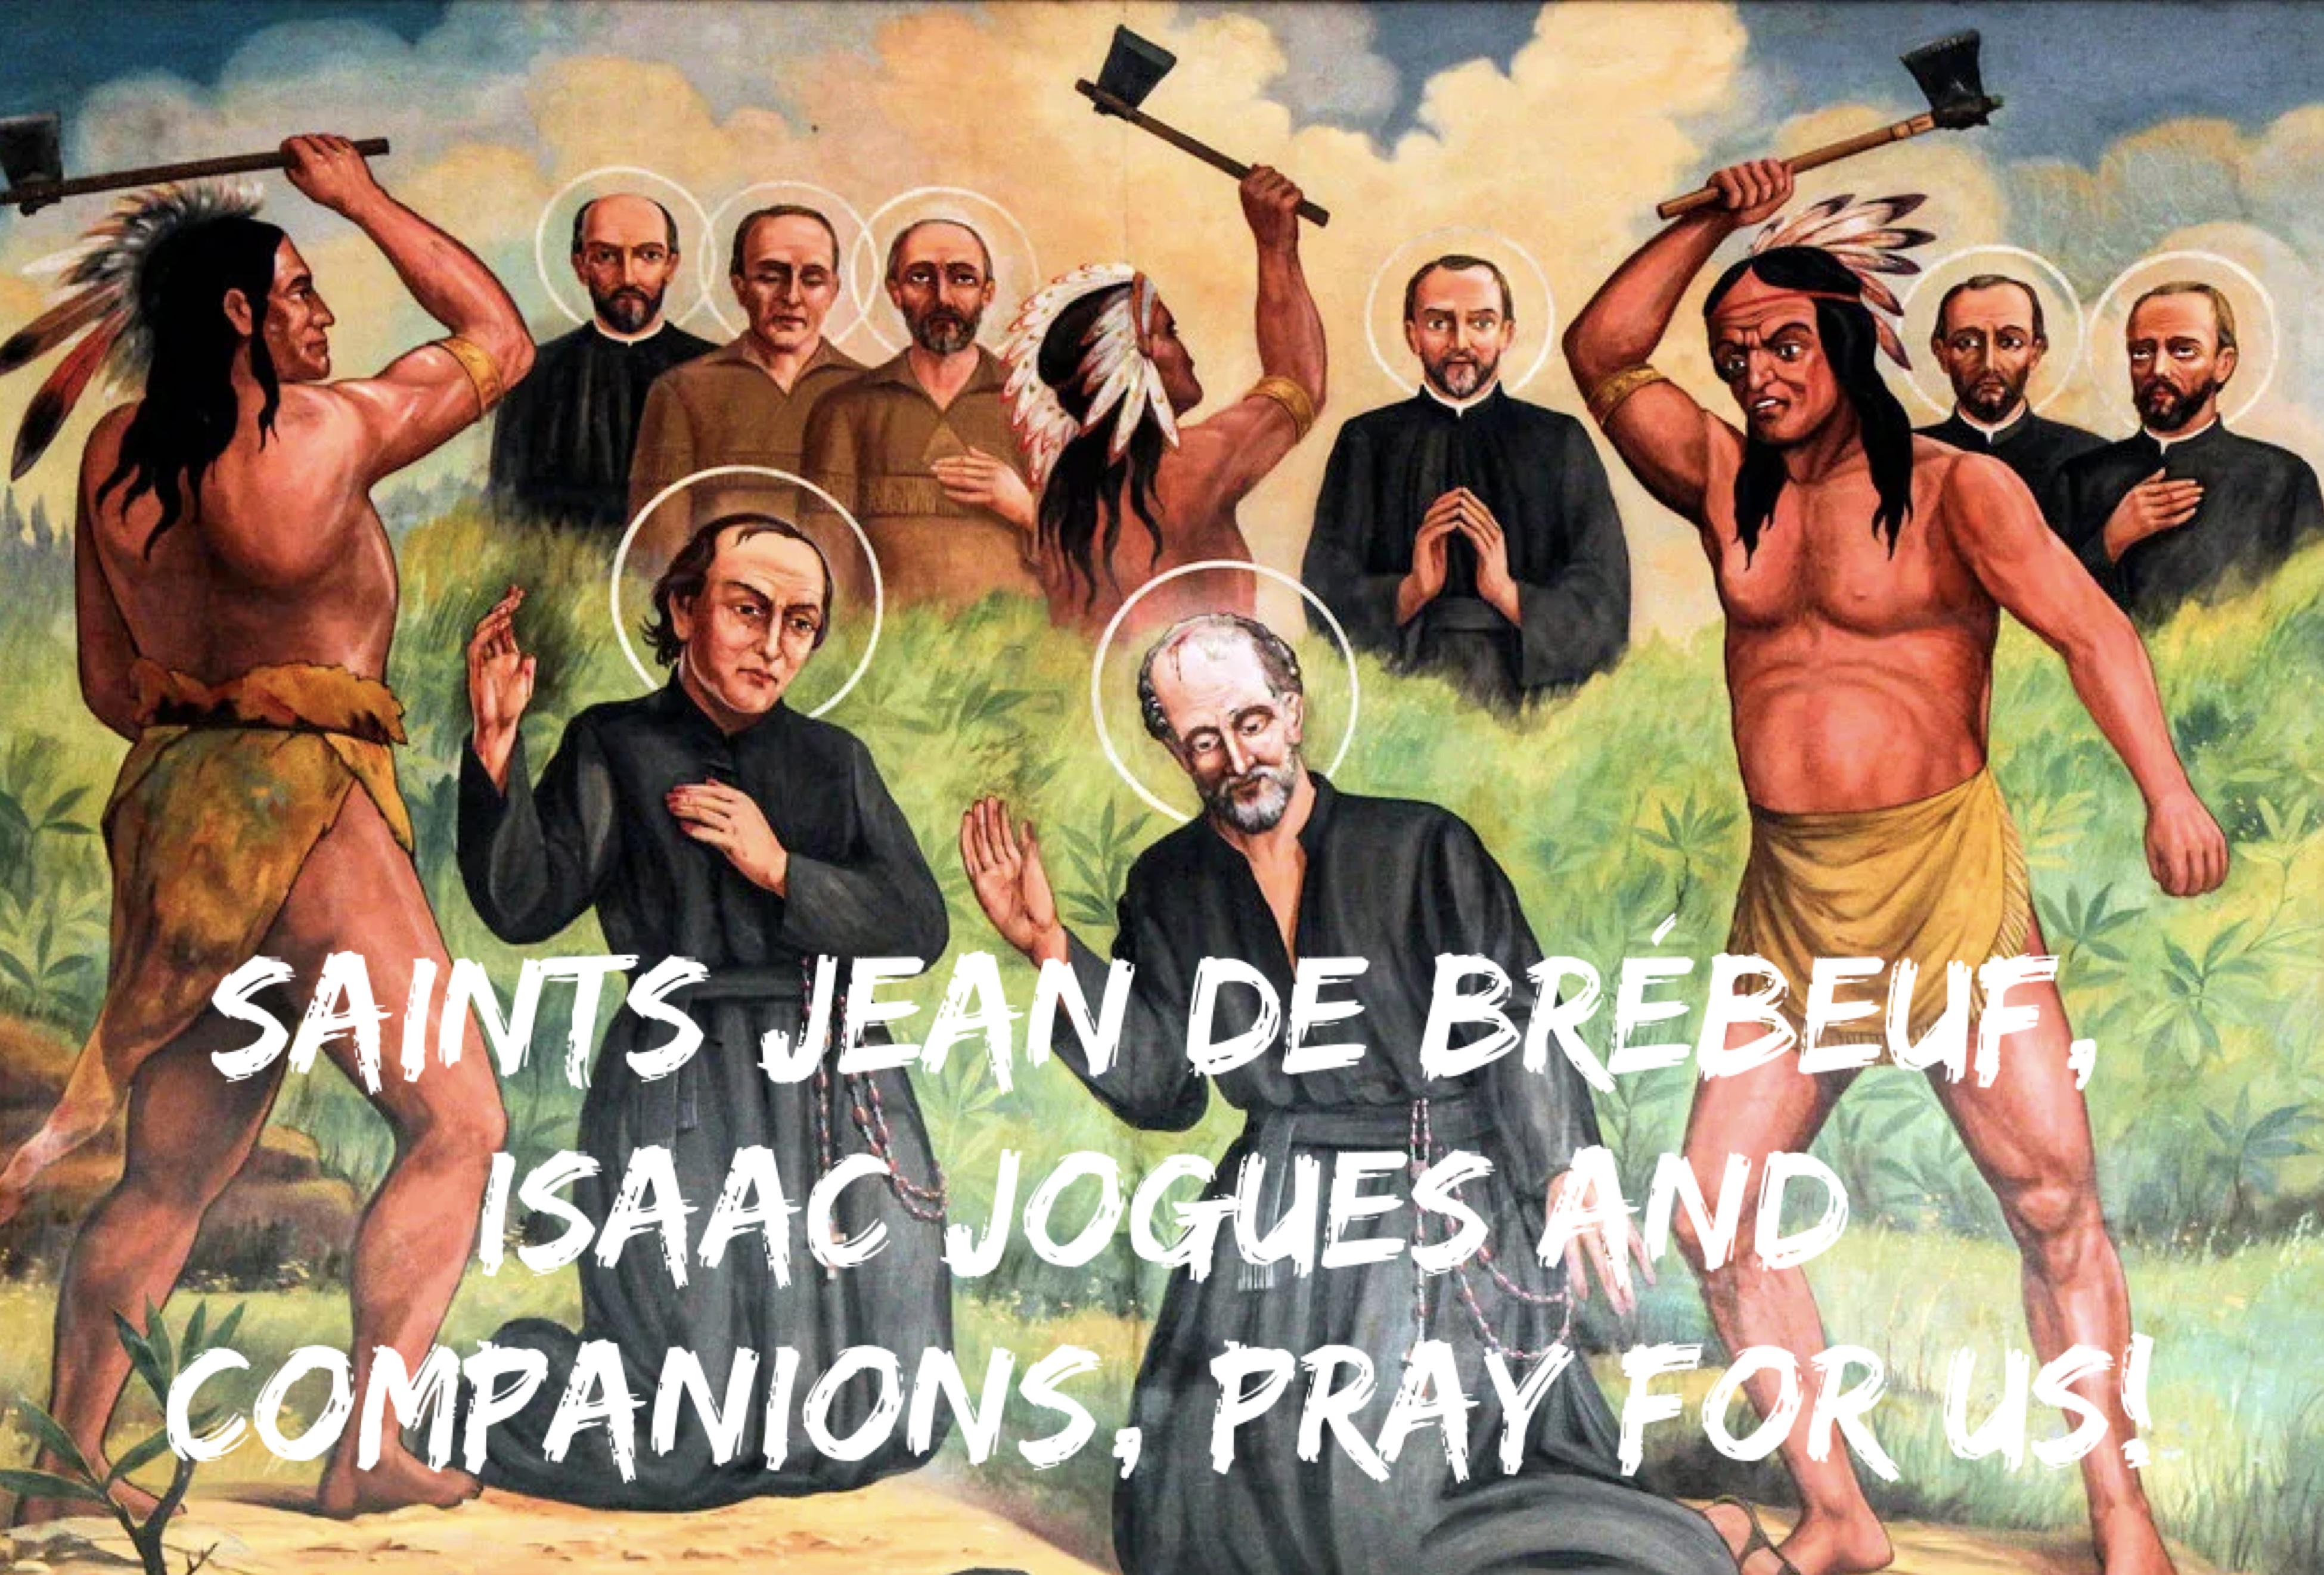 20th October - Saints Jean de Brébeuf, Isaac Jogues and Companions